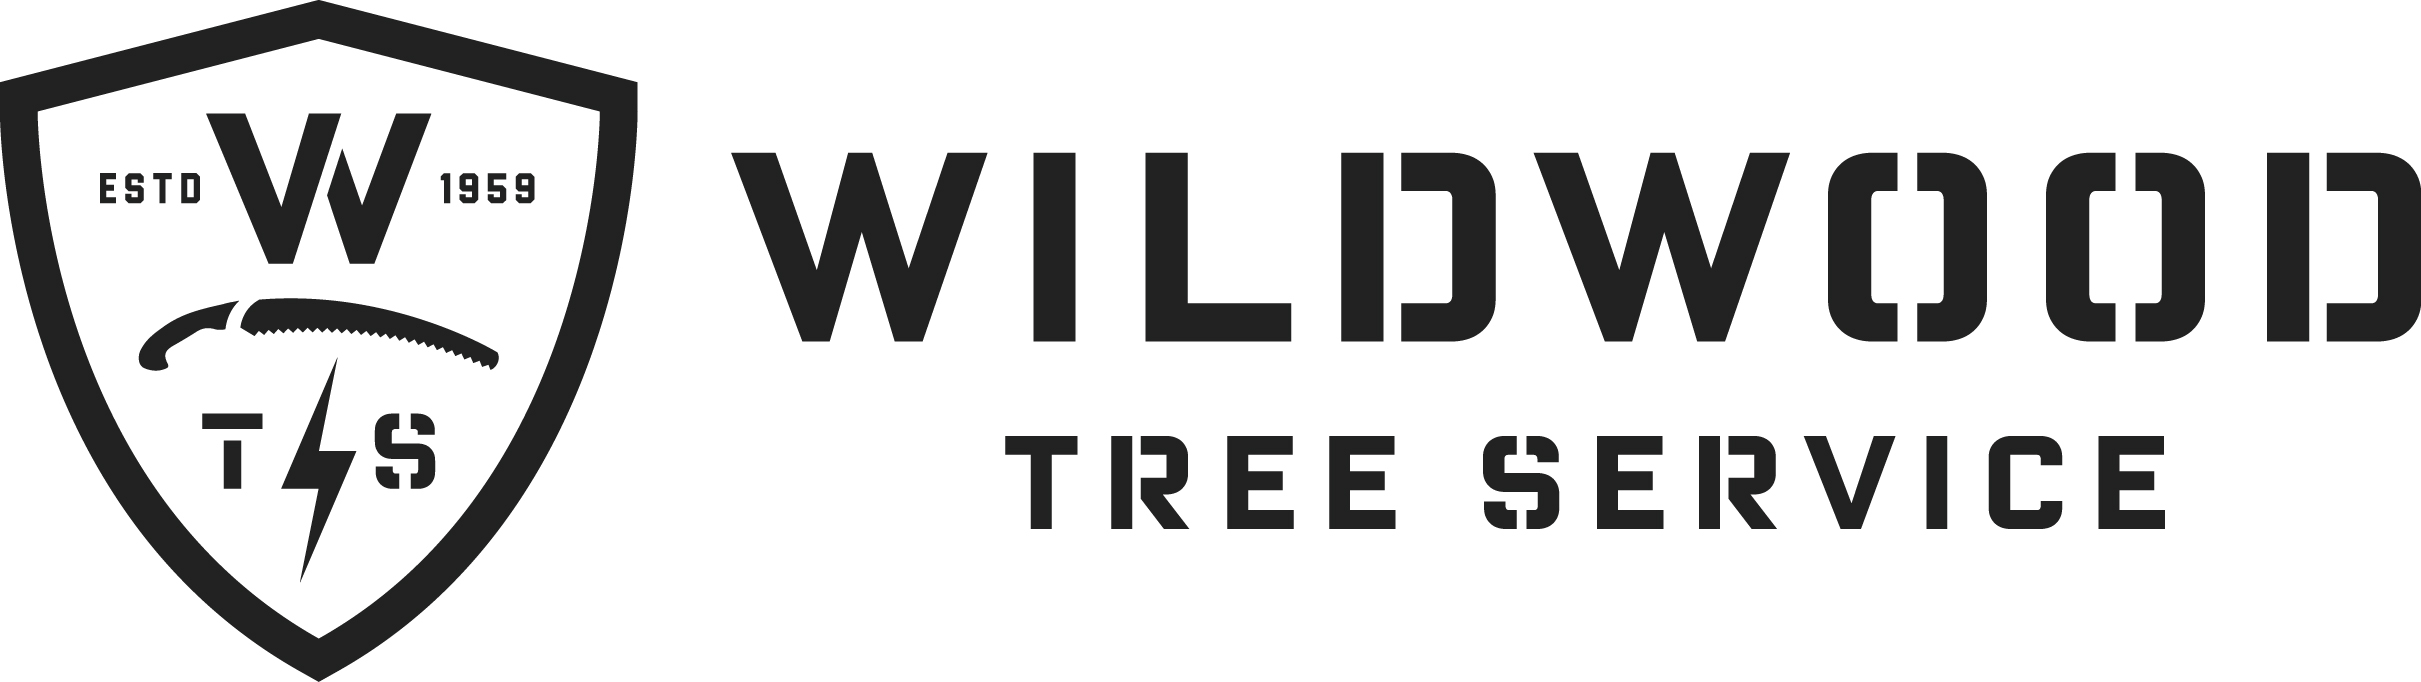 Wildwood Tree Service